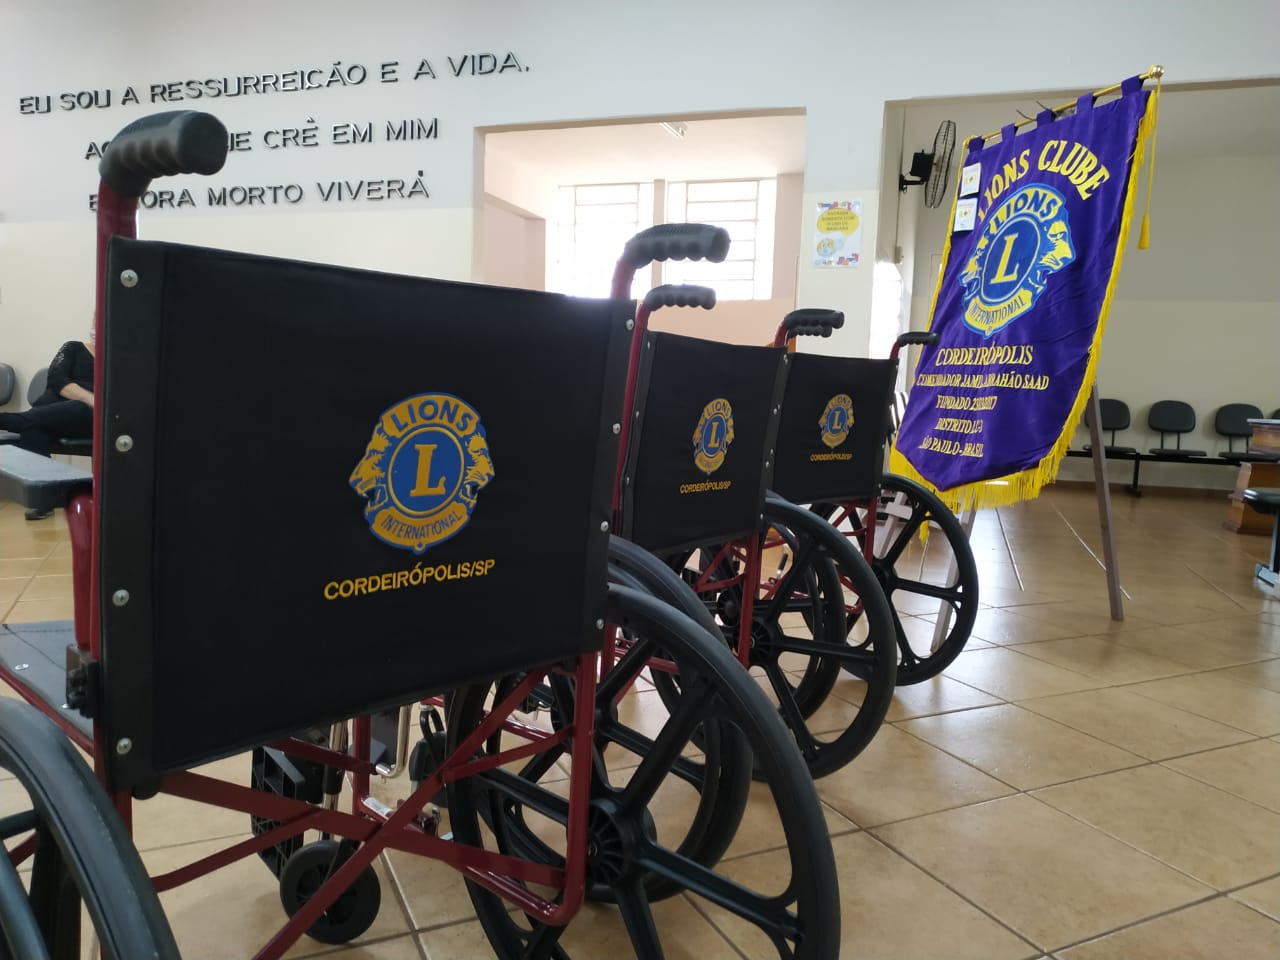 Lions de Cordeirópolis entrega mais cadeiras de rodas